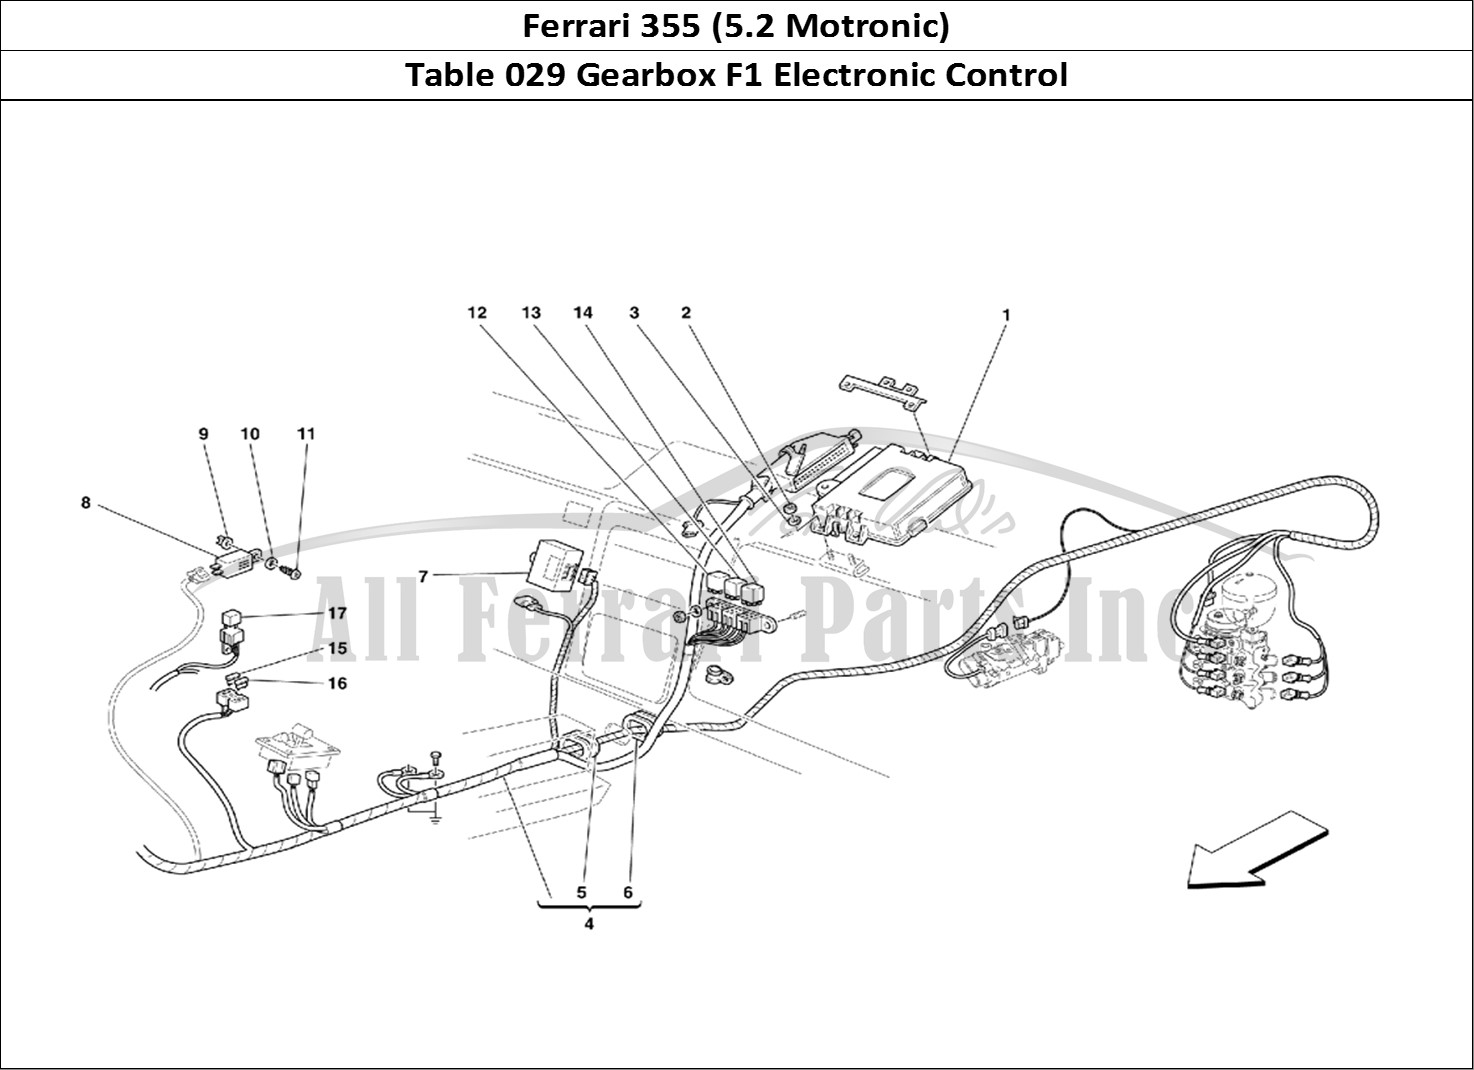 Ferrari Parts Ferrari 355 (5.2 Motronic) Page 029 Electronic Gearbox Contro